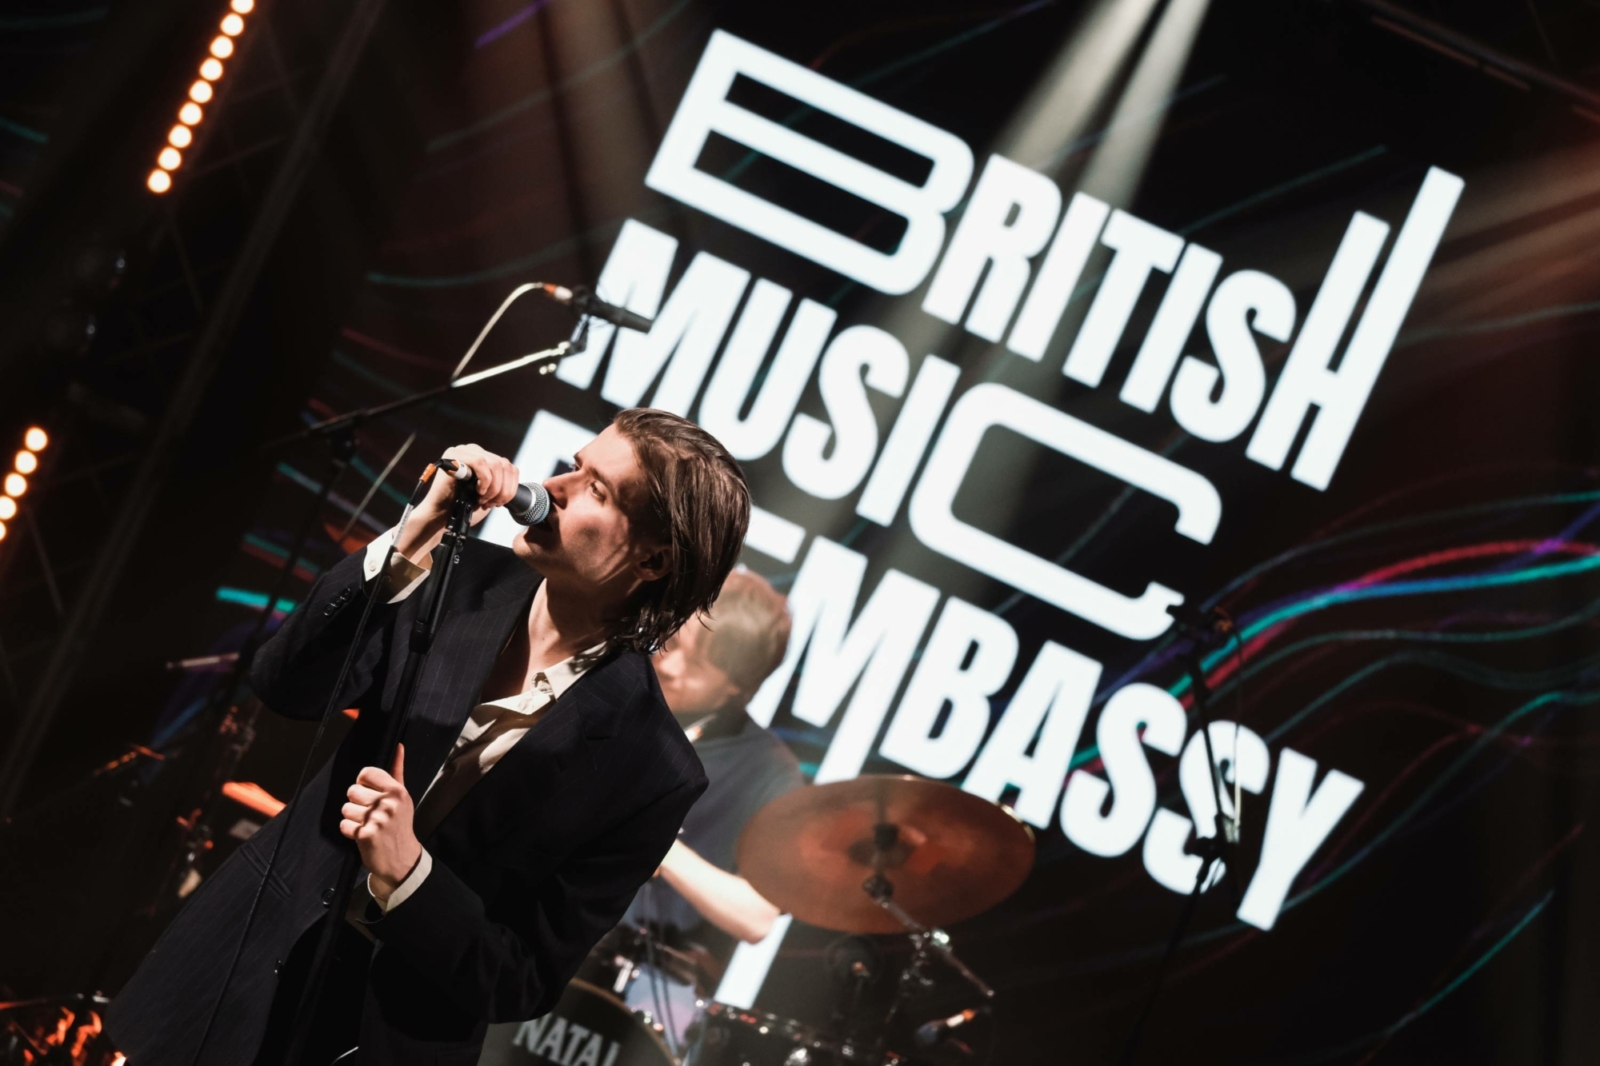 Watch more performances from SXSW 2021's British Music Embassy showcase